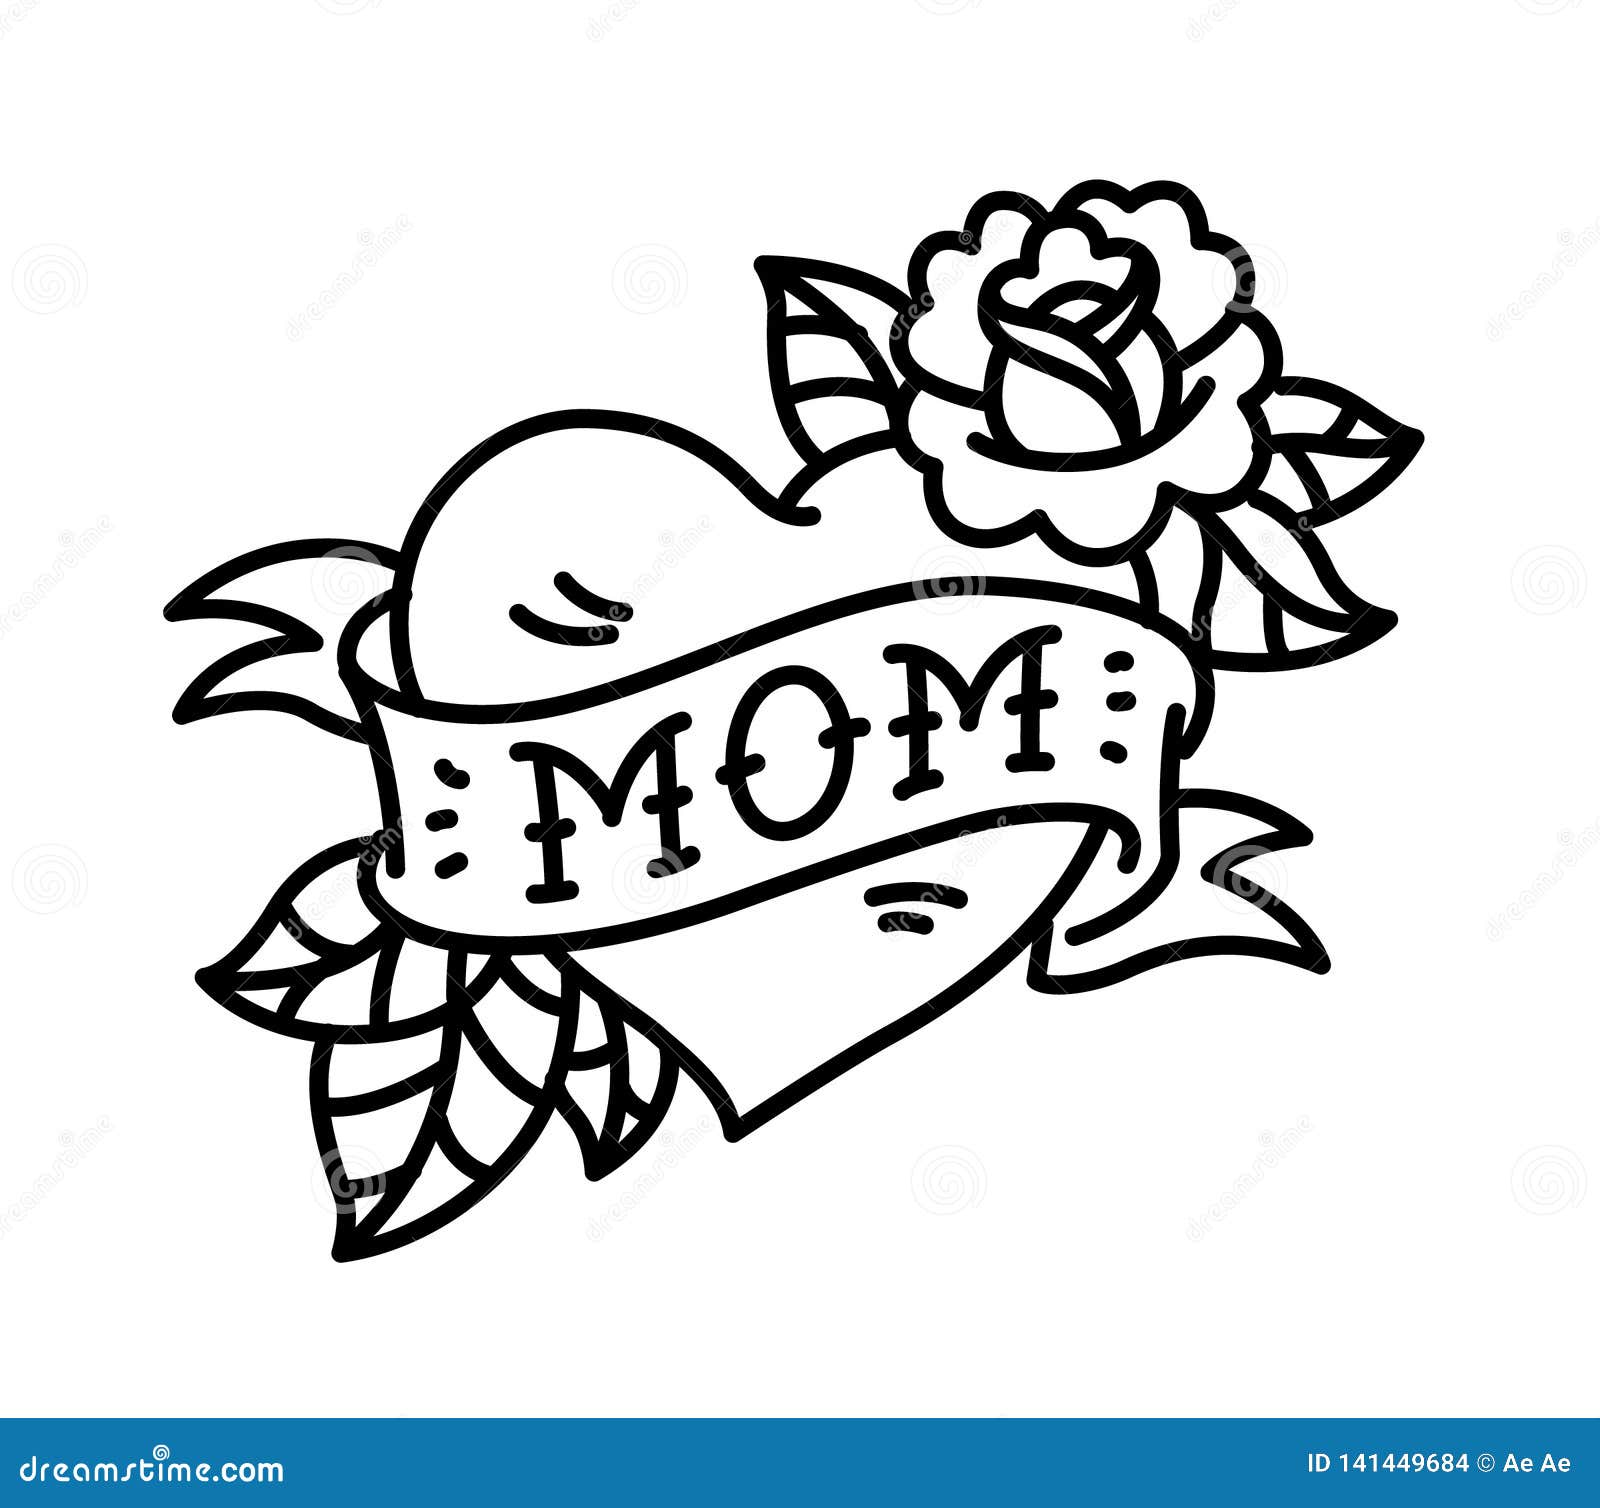 40 Traditional Mom Tattoo Designs For Men  Memorial Ideas